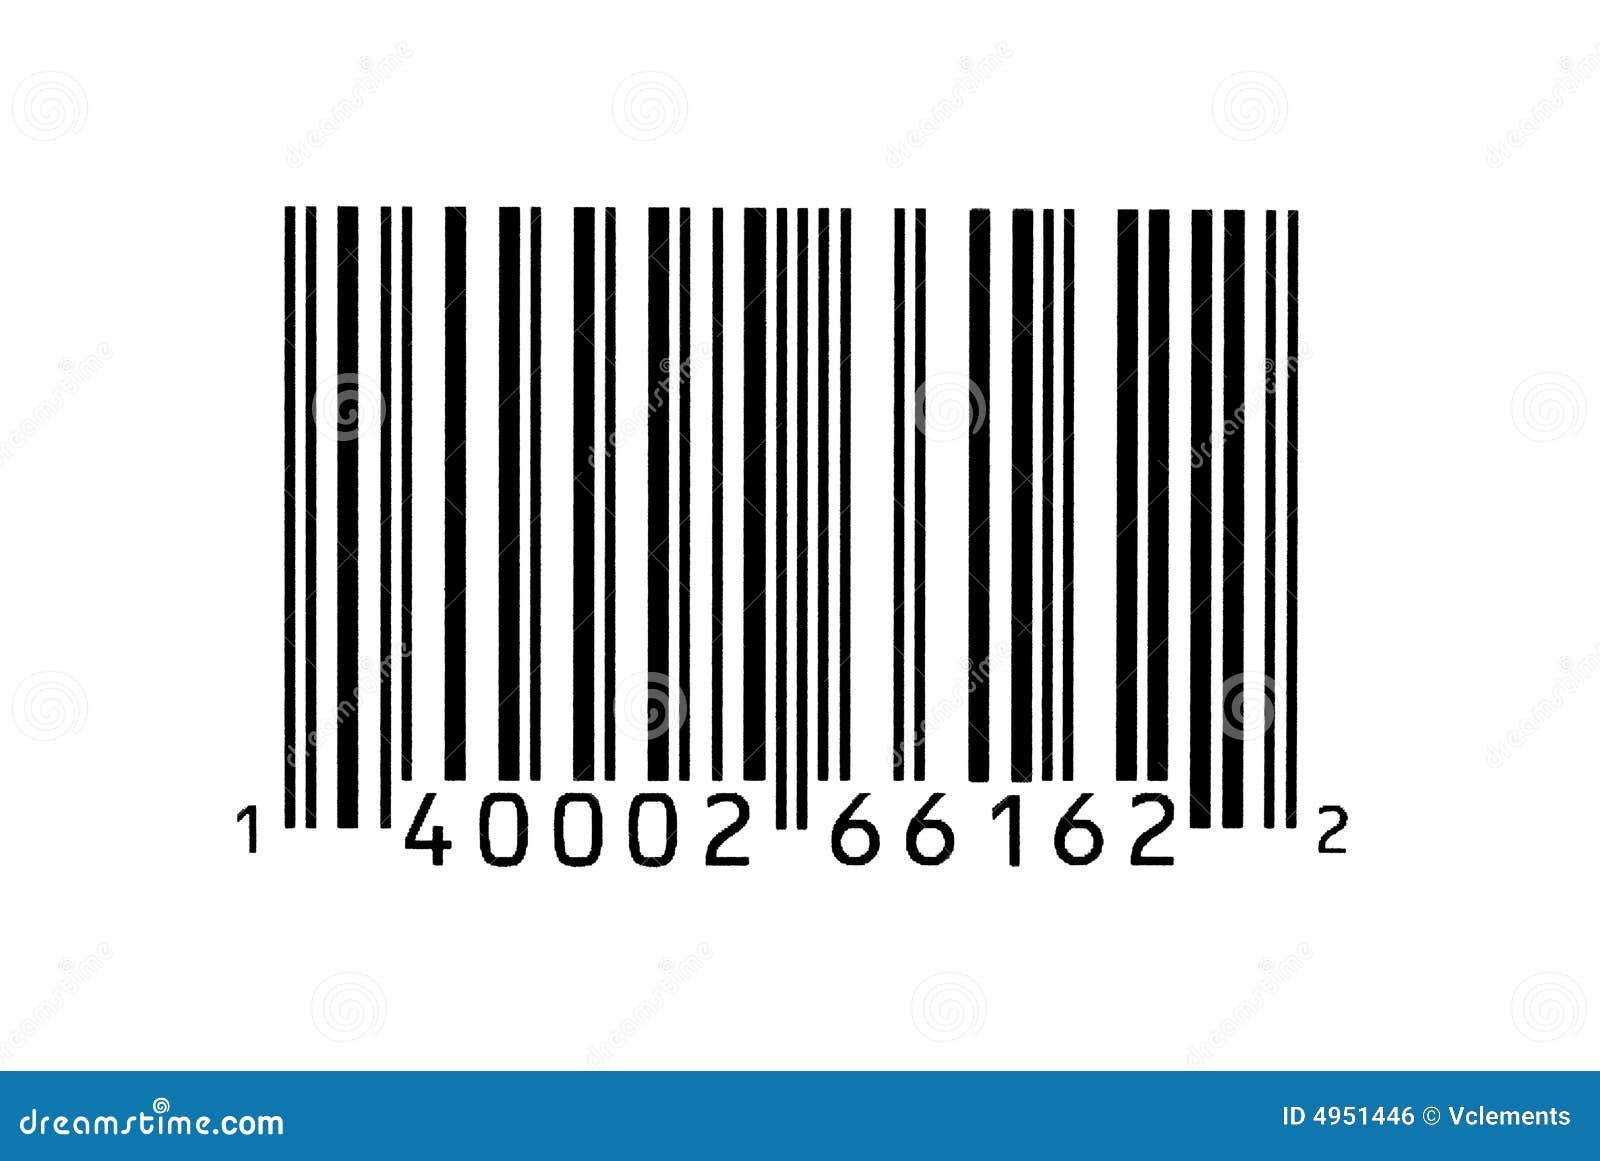 macro photograph of a bar code